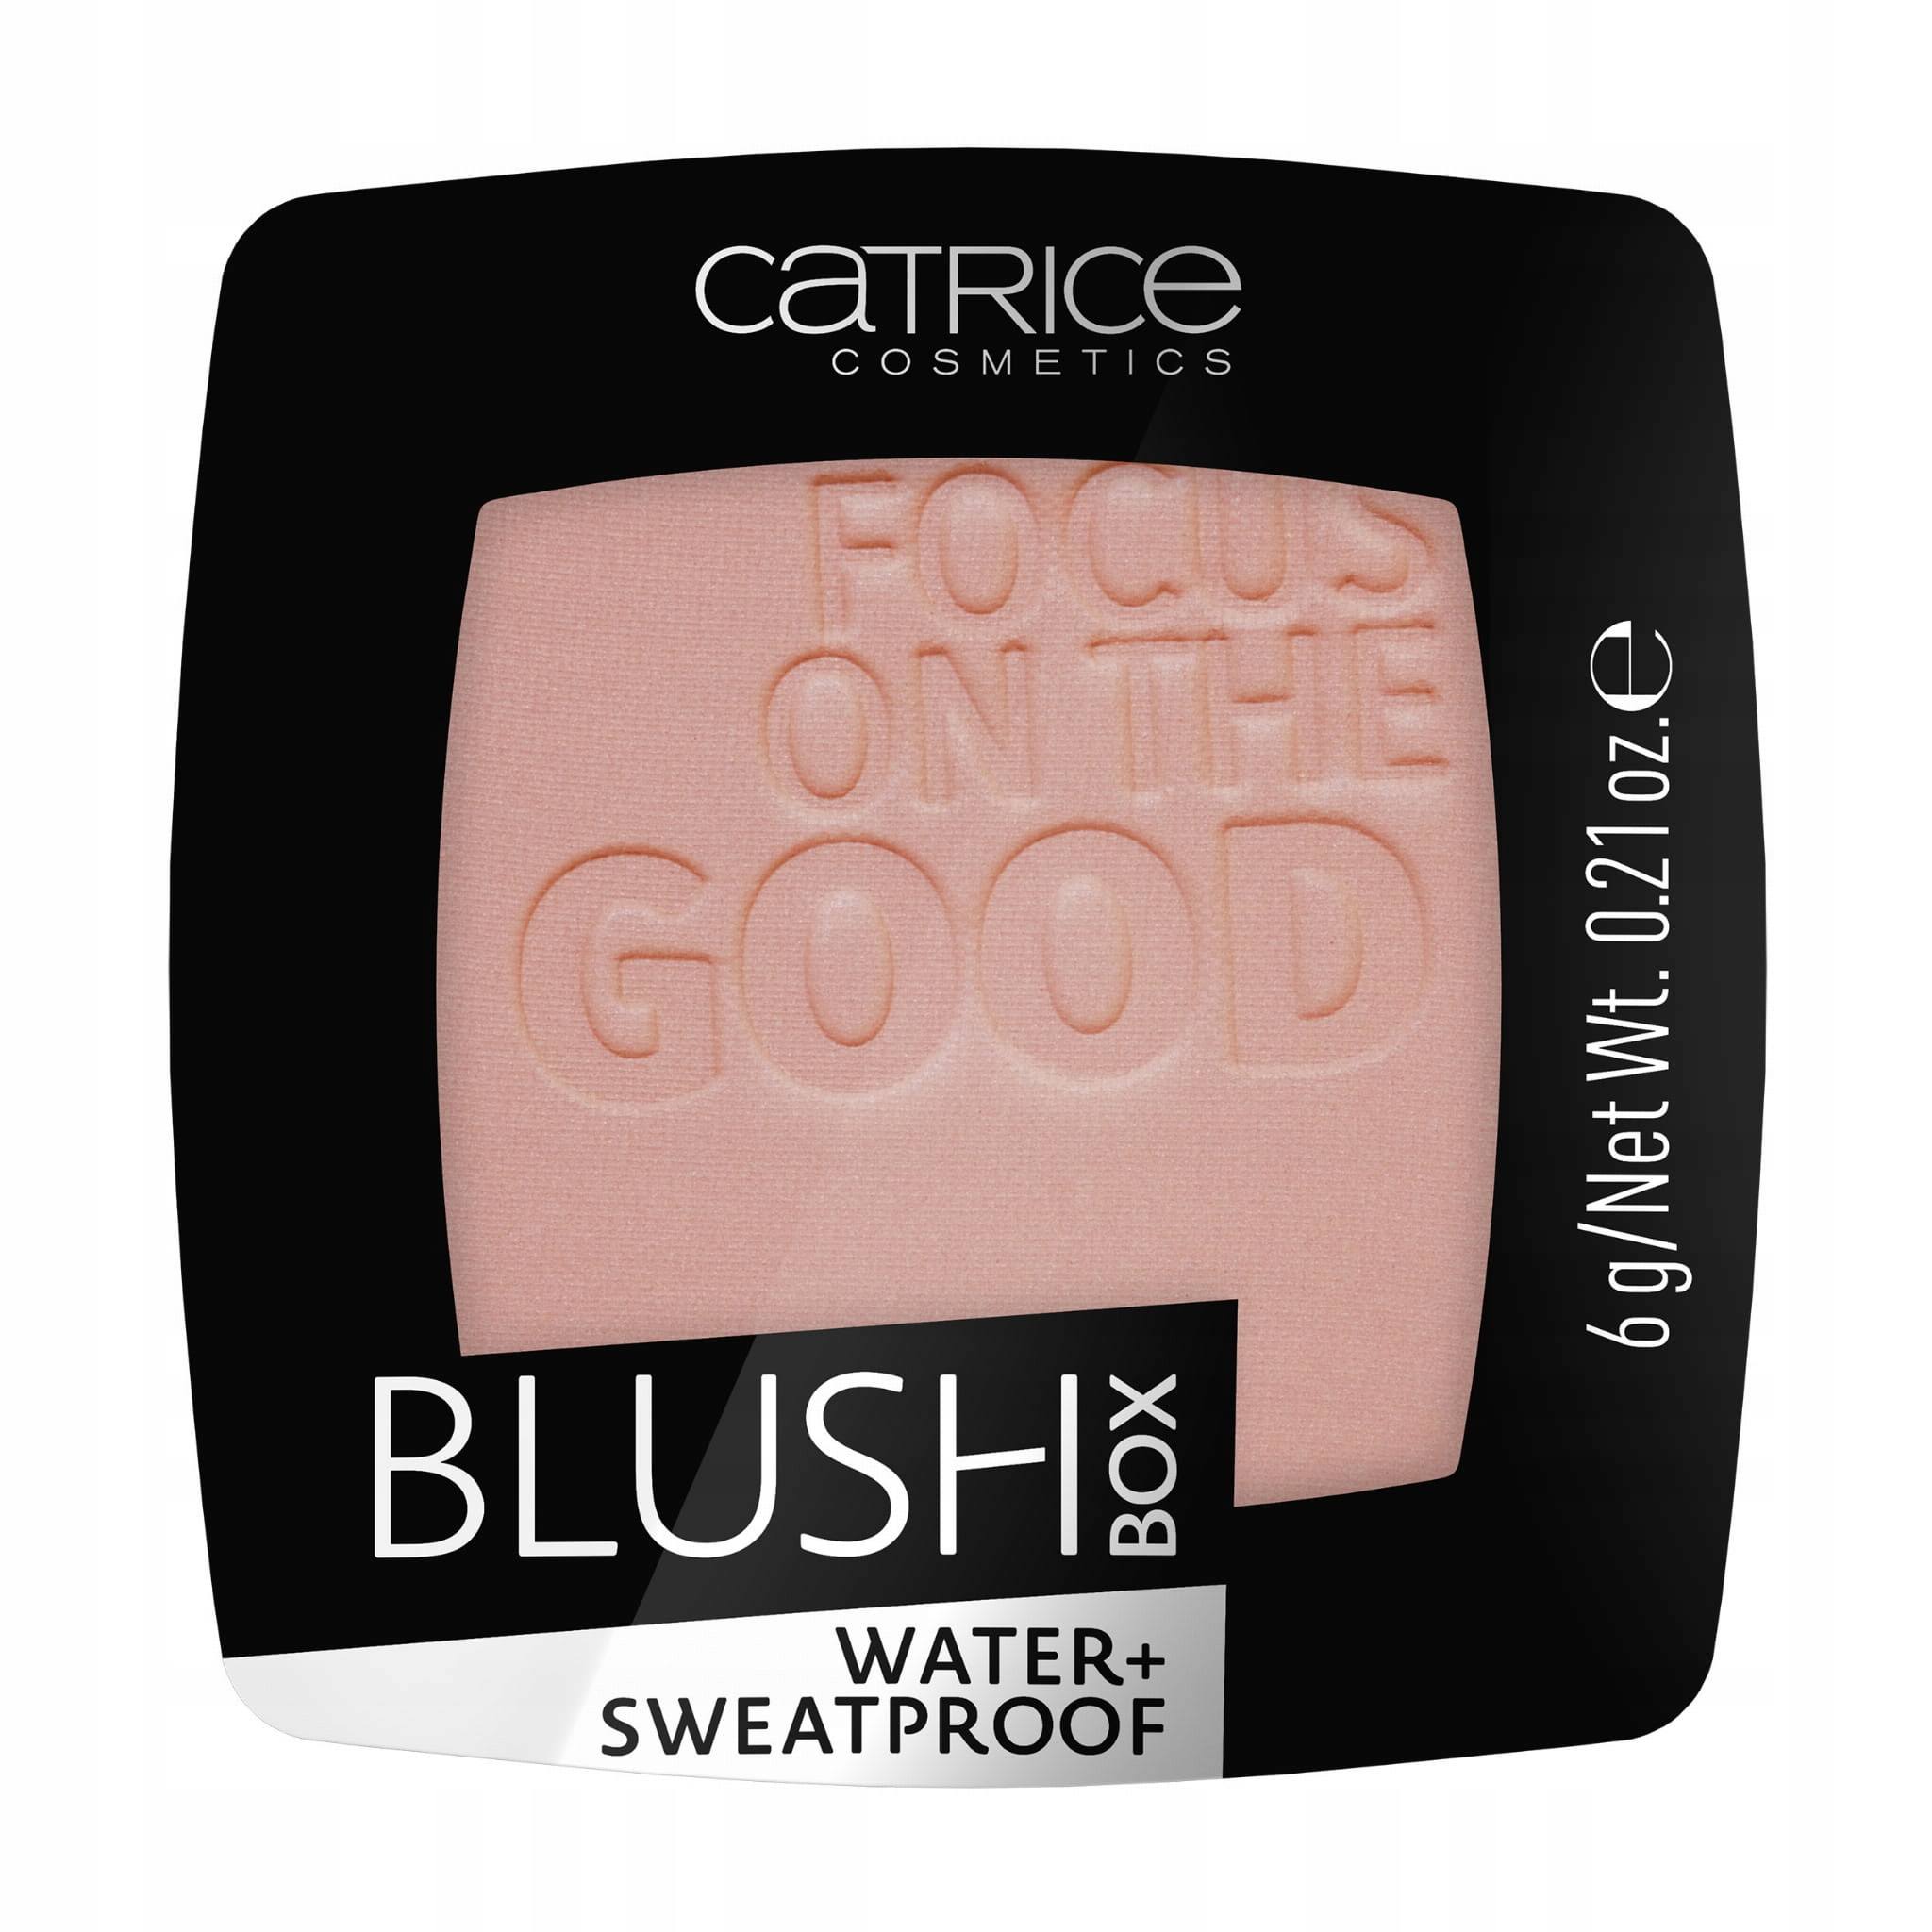 Catrice Blush Box 025 Nude Peach 6g